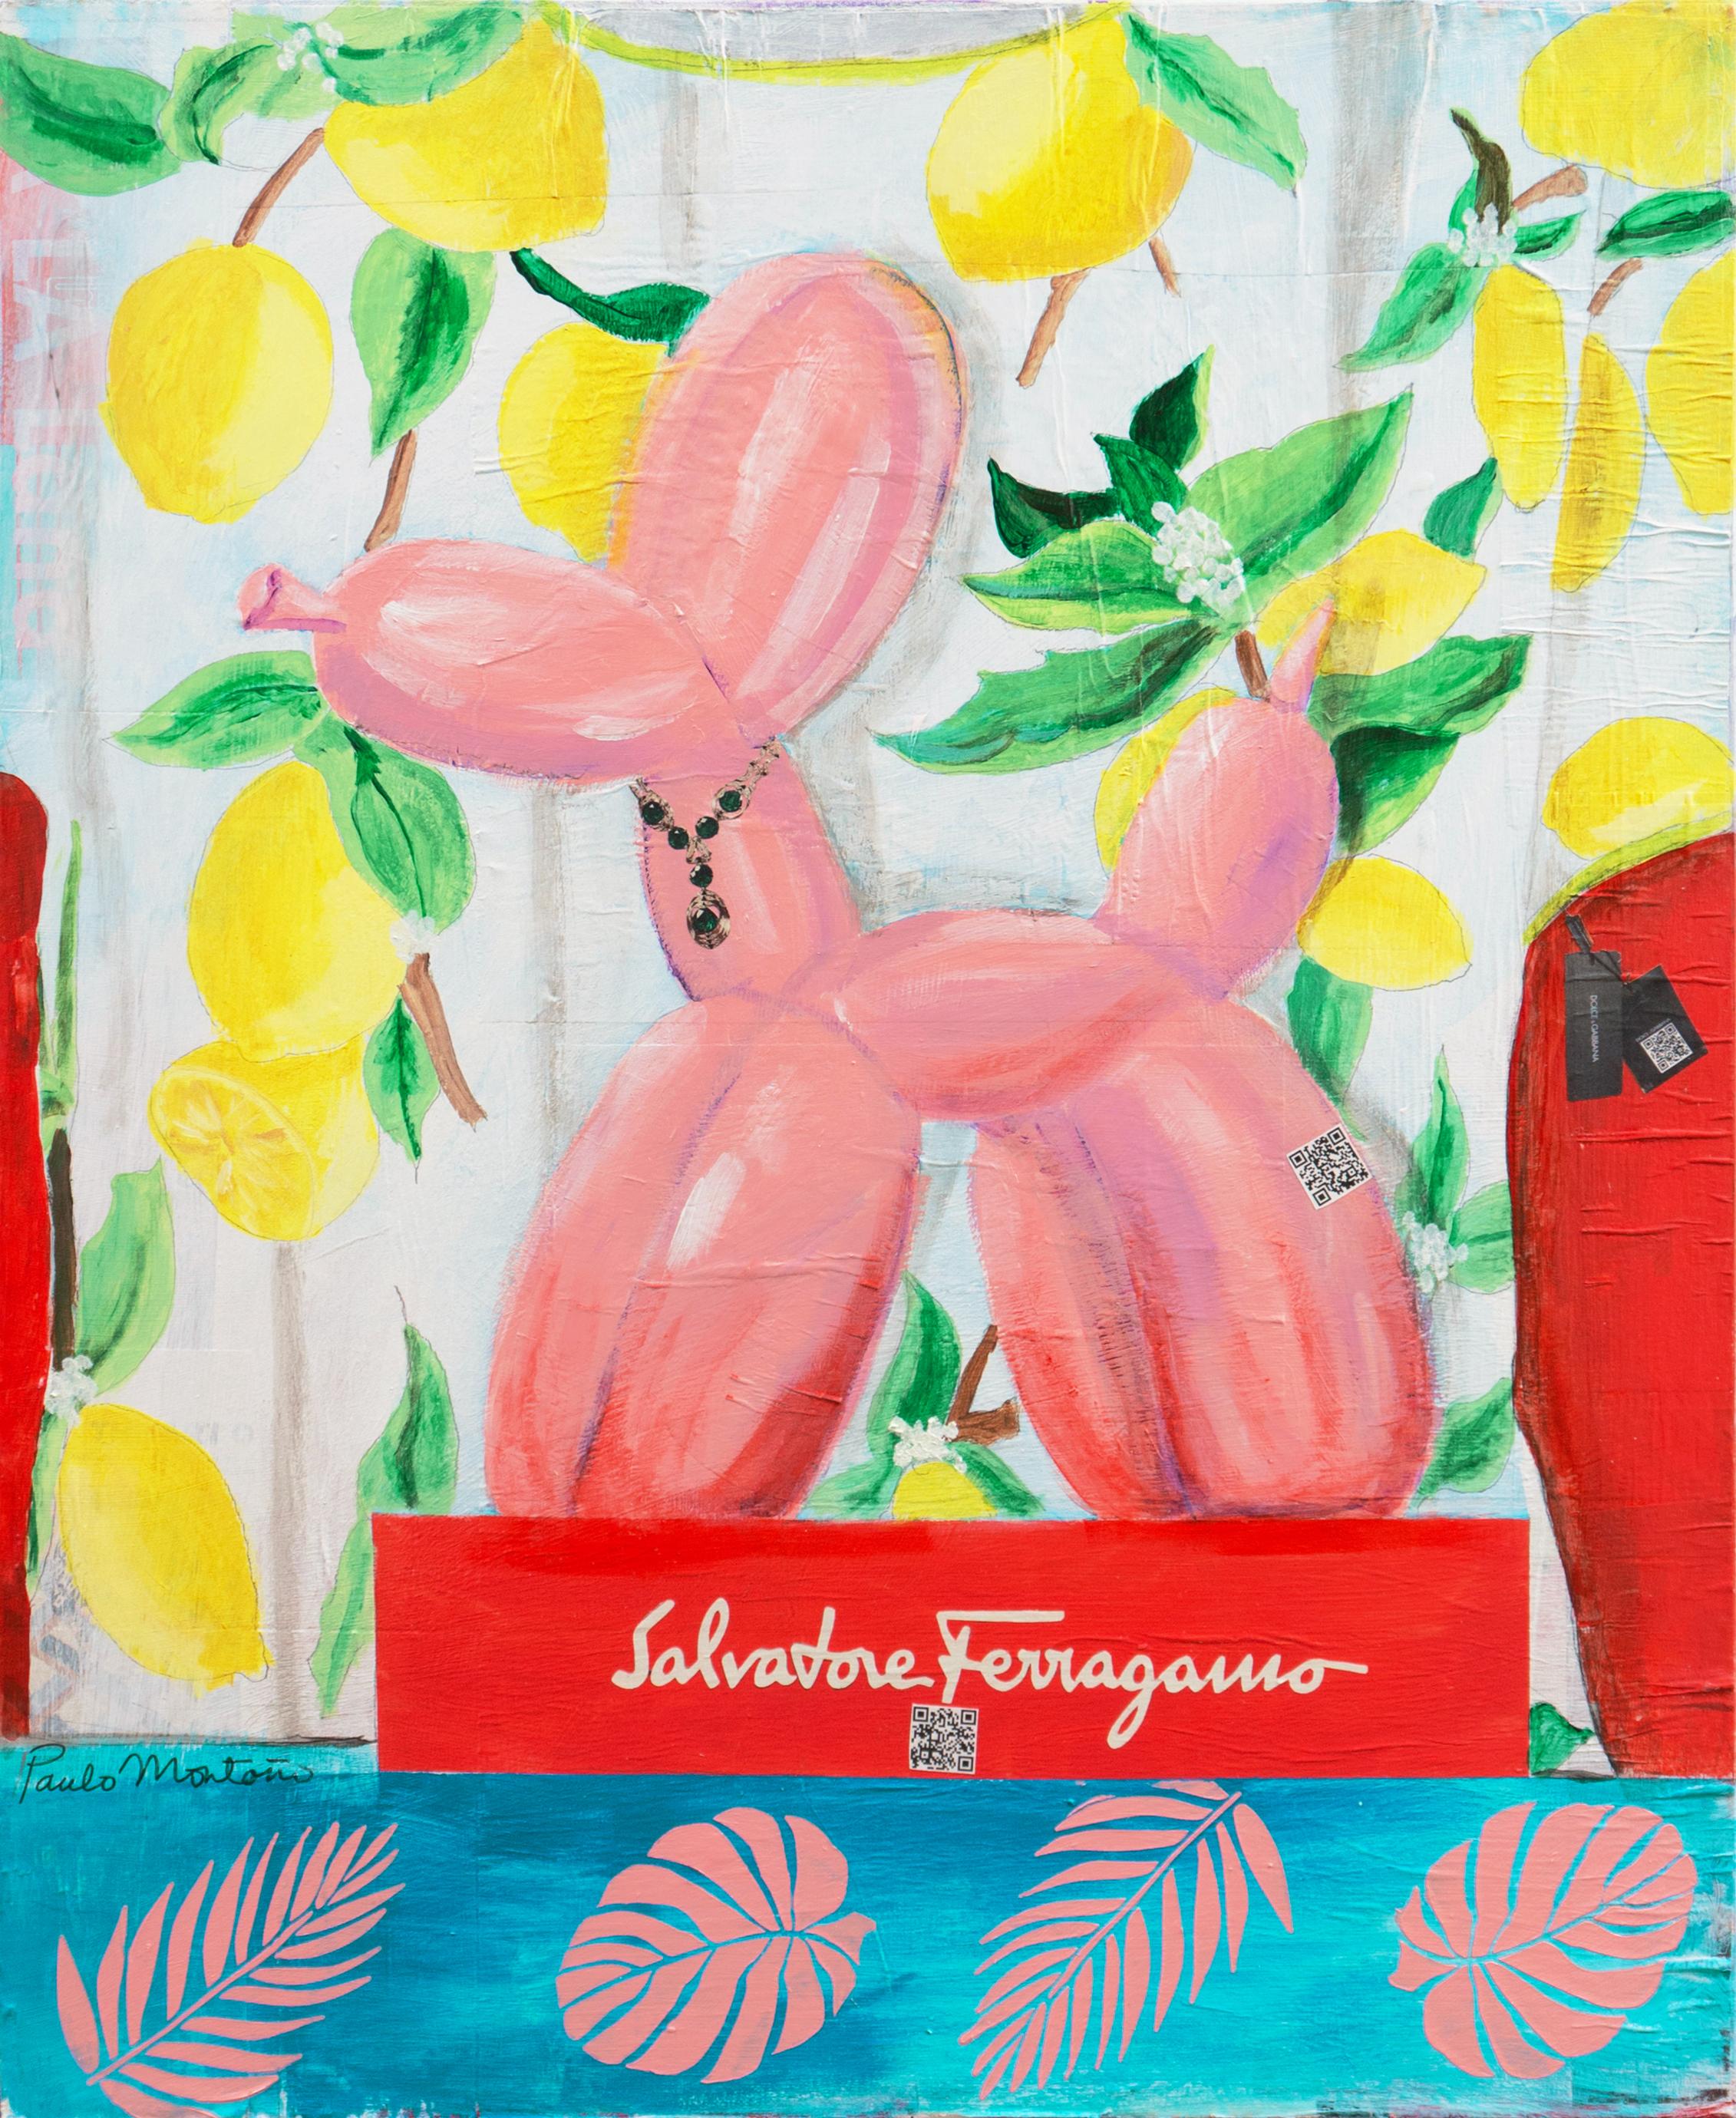  „Ferragamo Ballonhund“, Pop Art, Kalifornien, Jeff Koons, Ausziehbarer Kaninchen